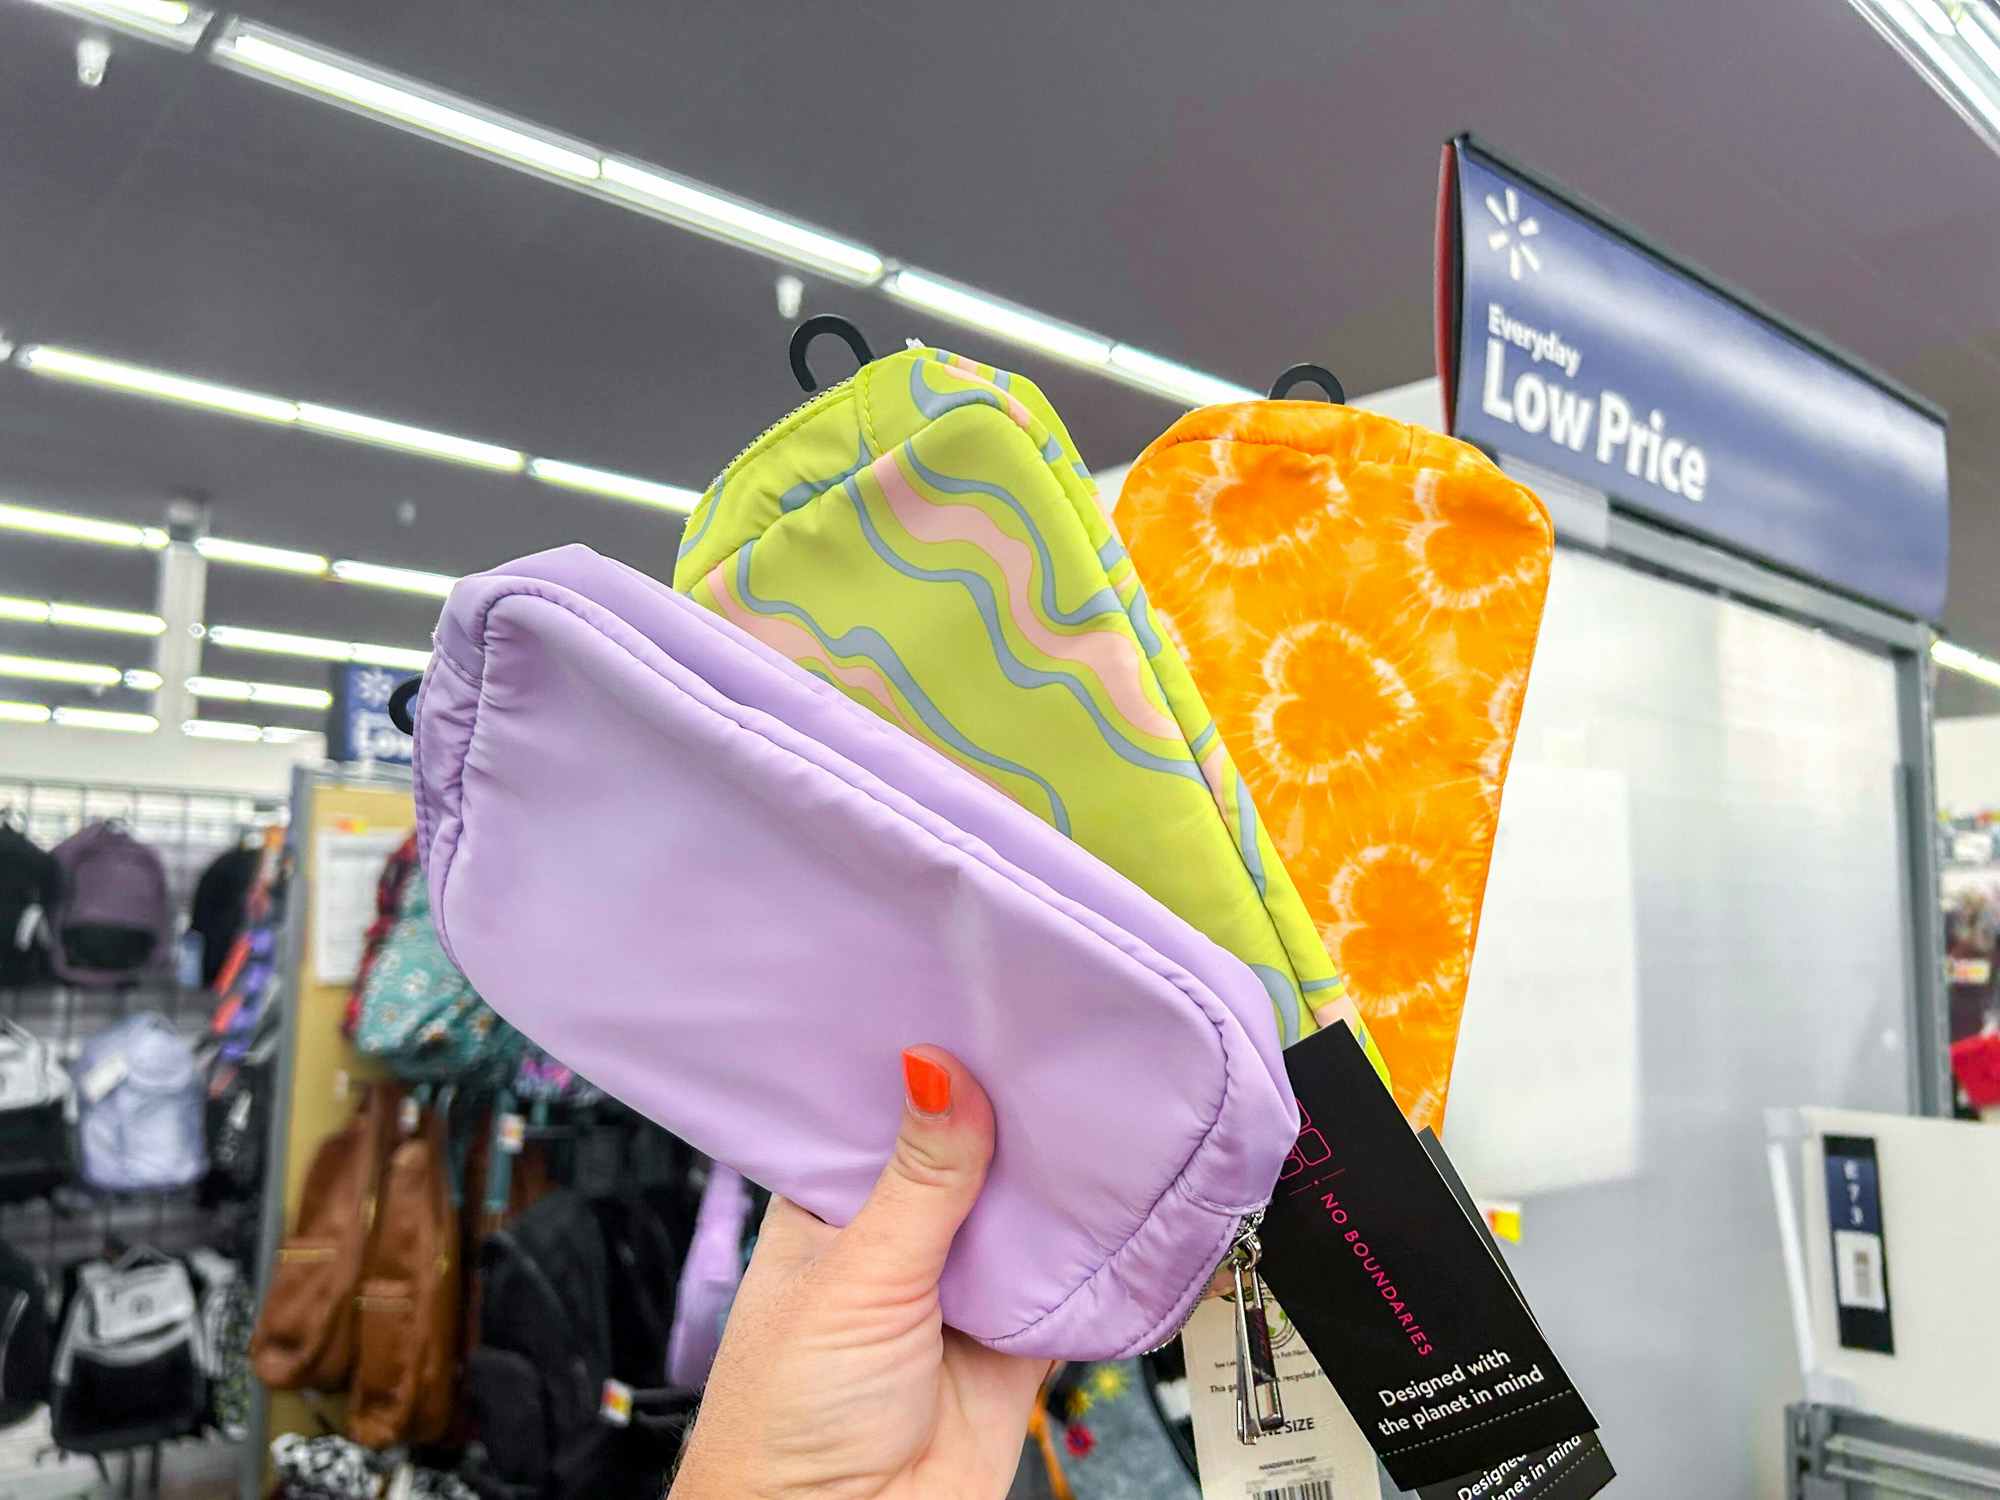 Lululemon Everywhere Belt Bag Dupe: $15 Lookalike at Target